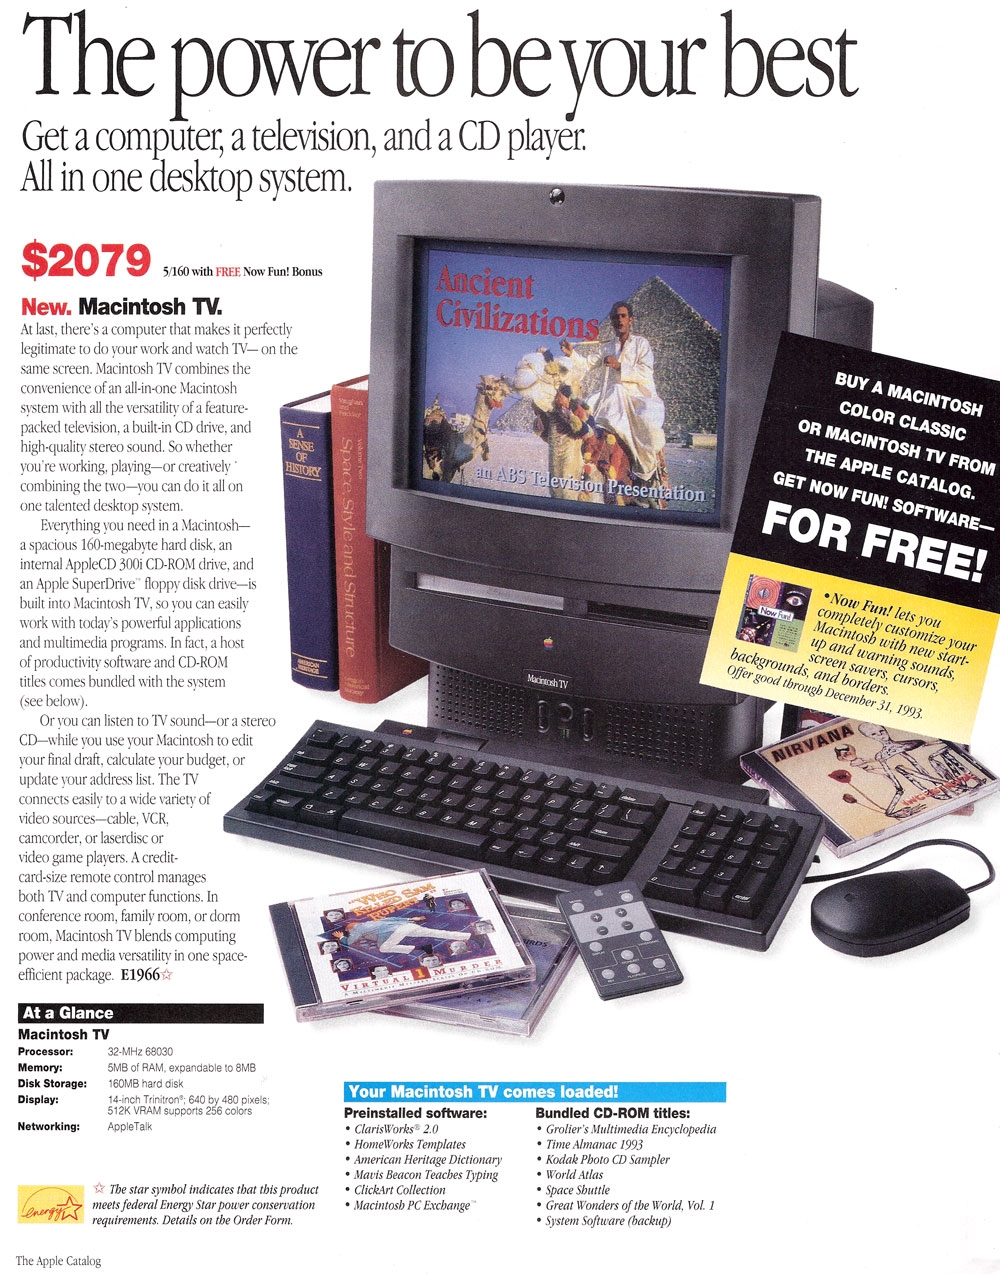 1993 Macintosh TV, the precursor to the Apple TV of today (2023)